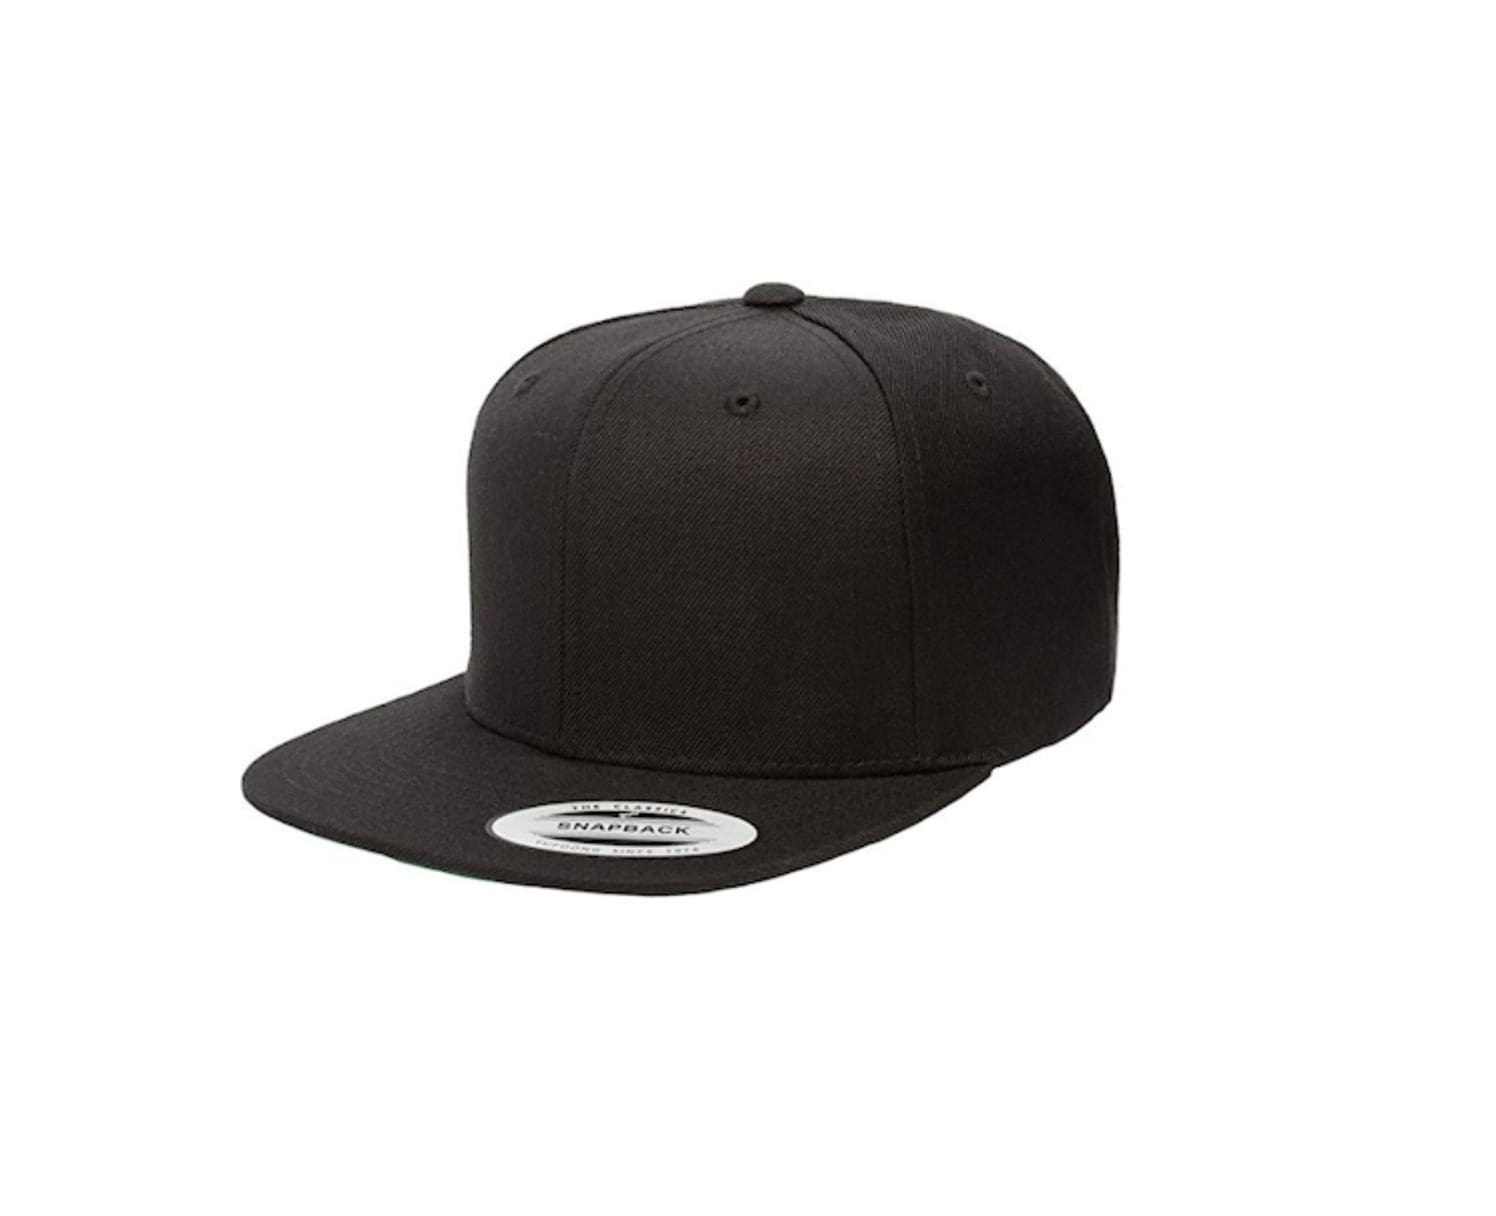 Grooveman Music Hats One Size / Black Premium 6-Panel Snapback Cap